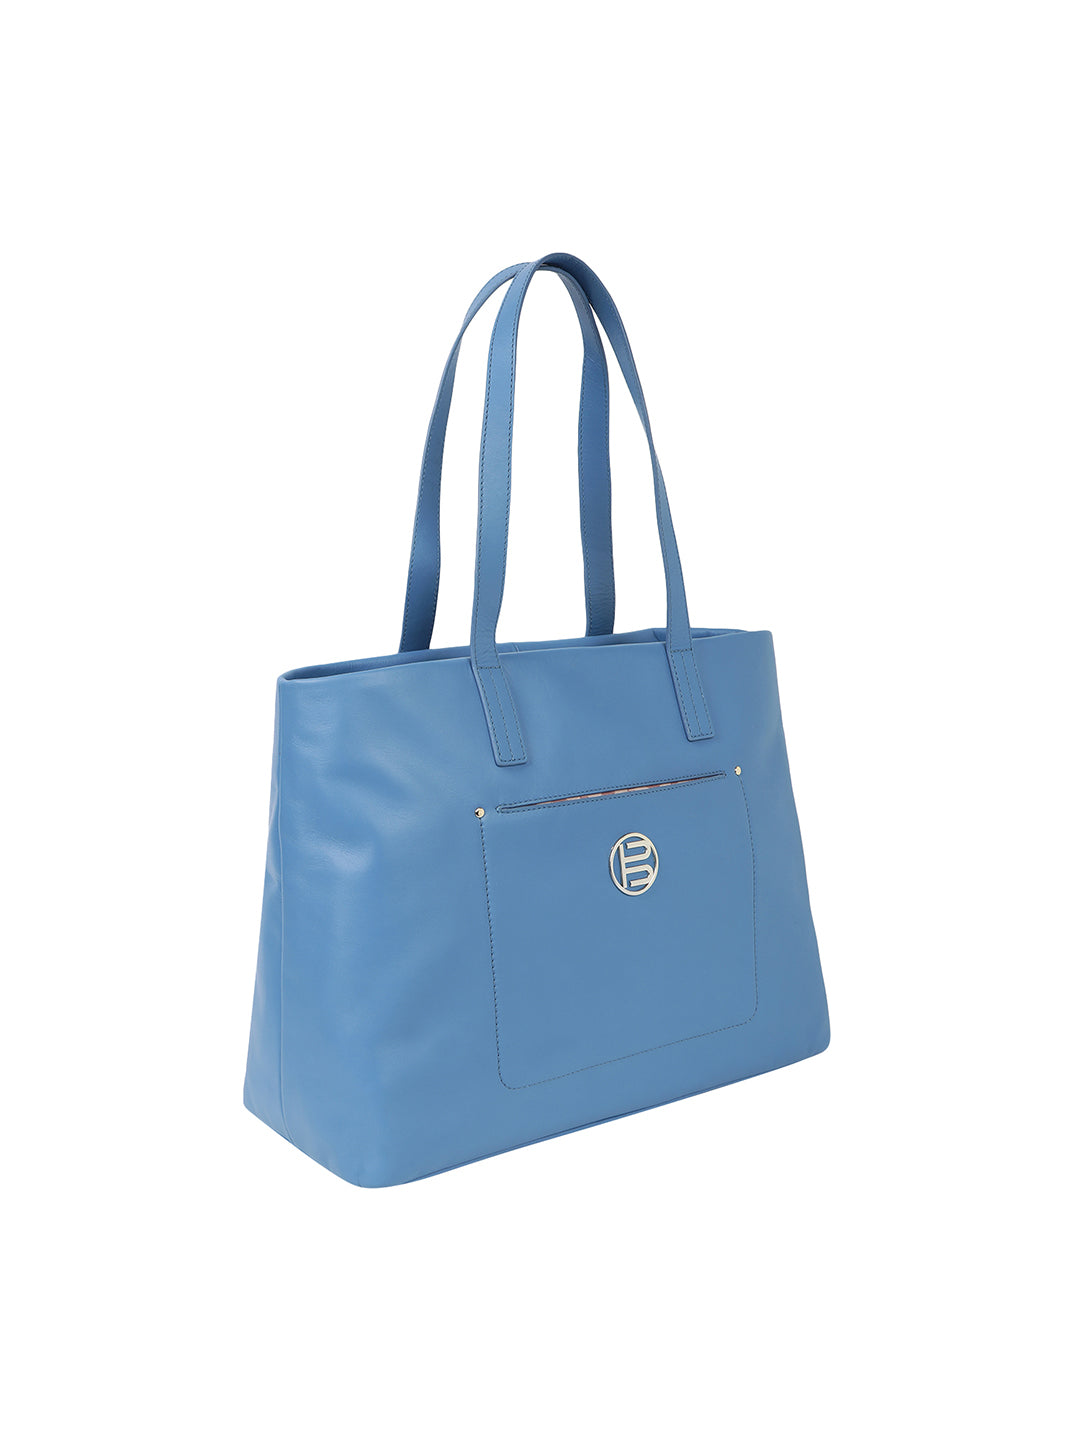 Veneto Blue Leather Tote Bag